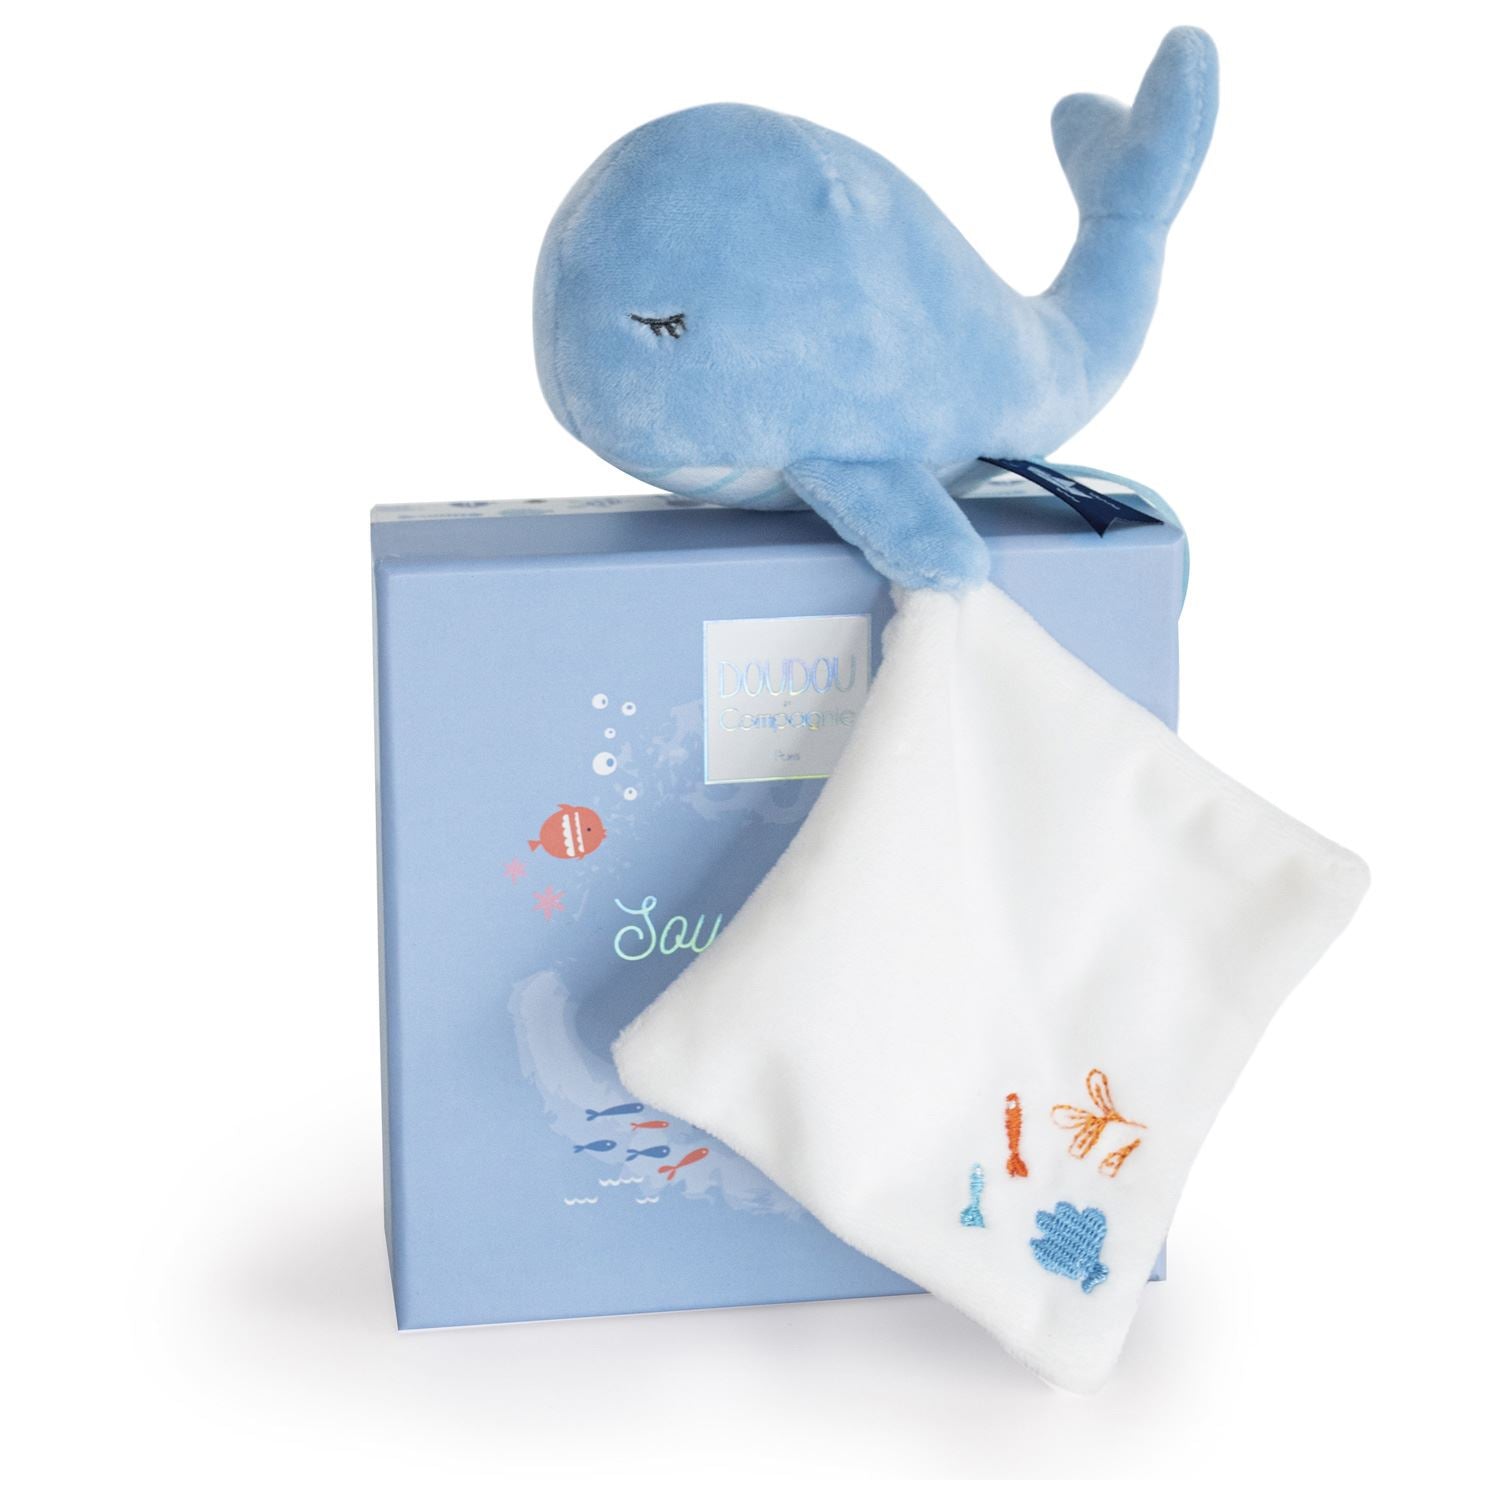 Doudou et Compagnie Under the Sea: Whale Plush with Doudou blanket Plushies